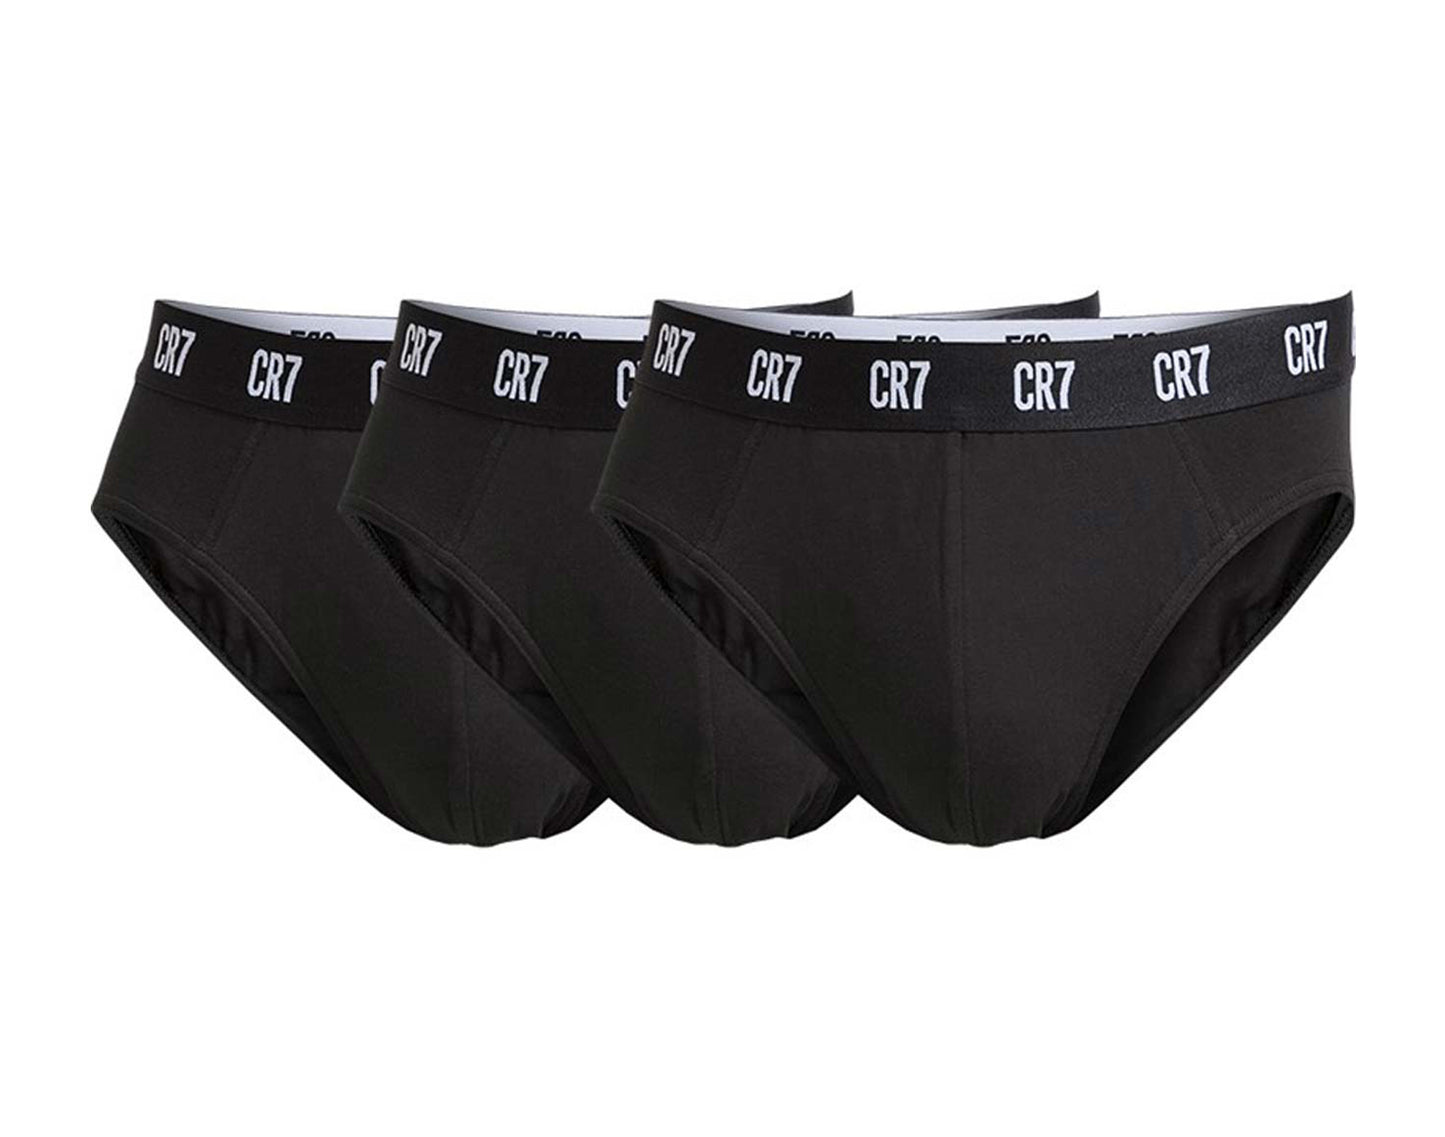 Cristiano Ronaldo CR7 Basic 3-Pack Cotton Briefs Men's Underwear